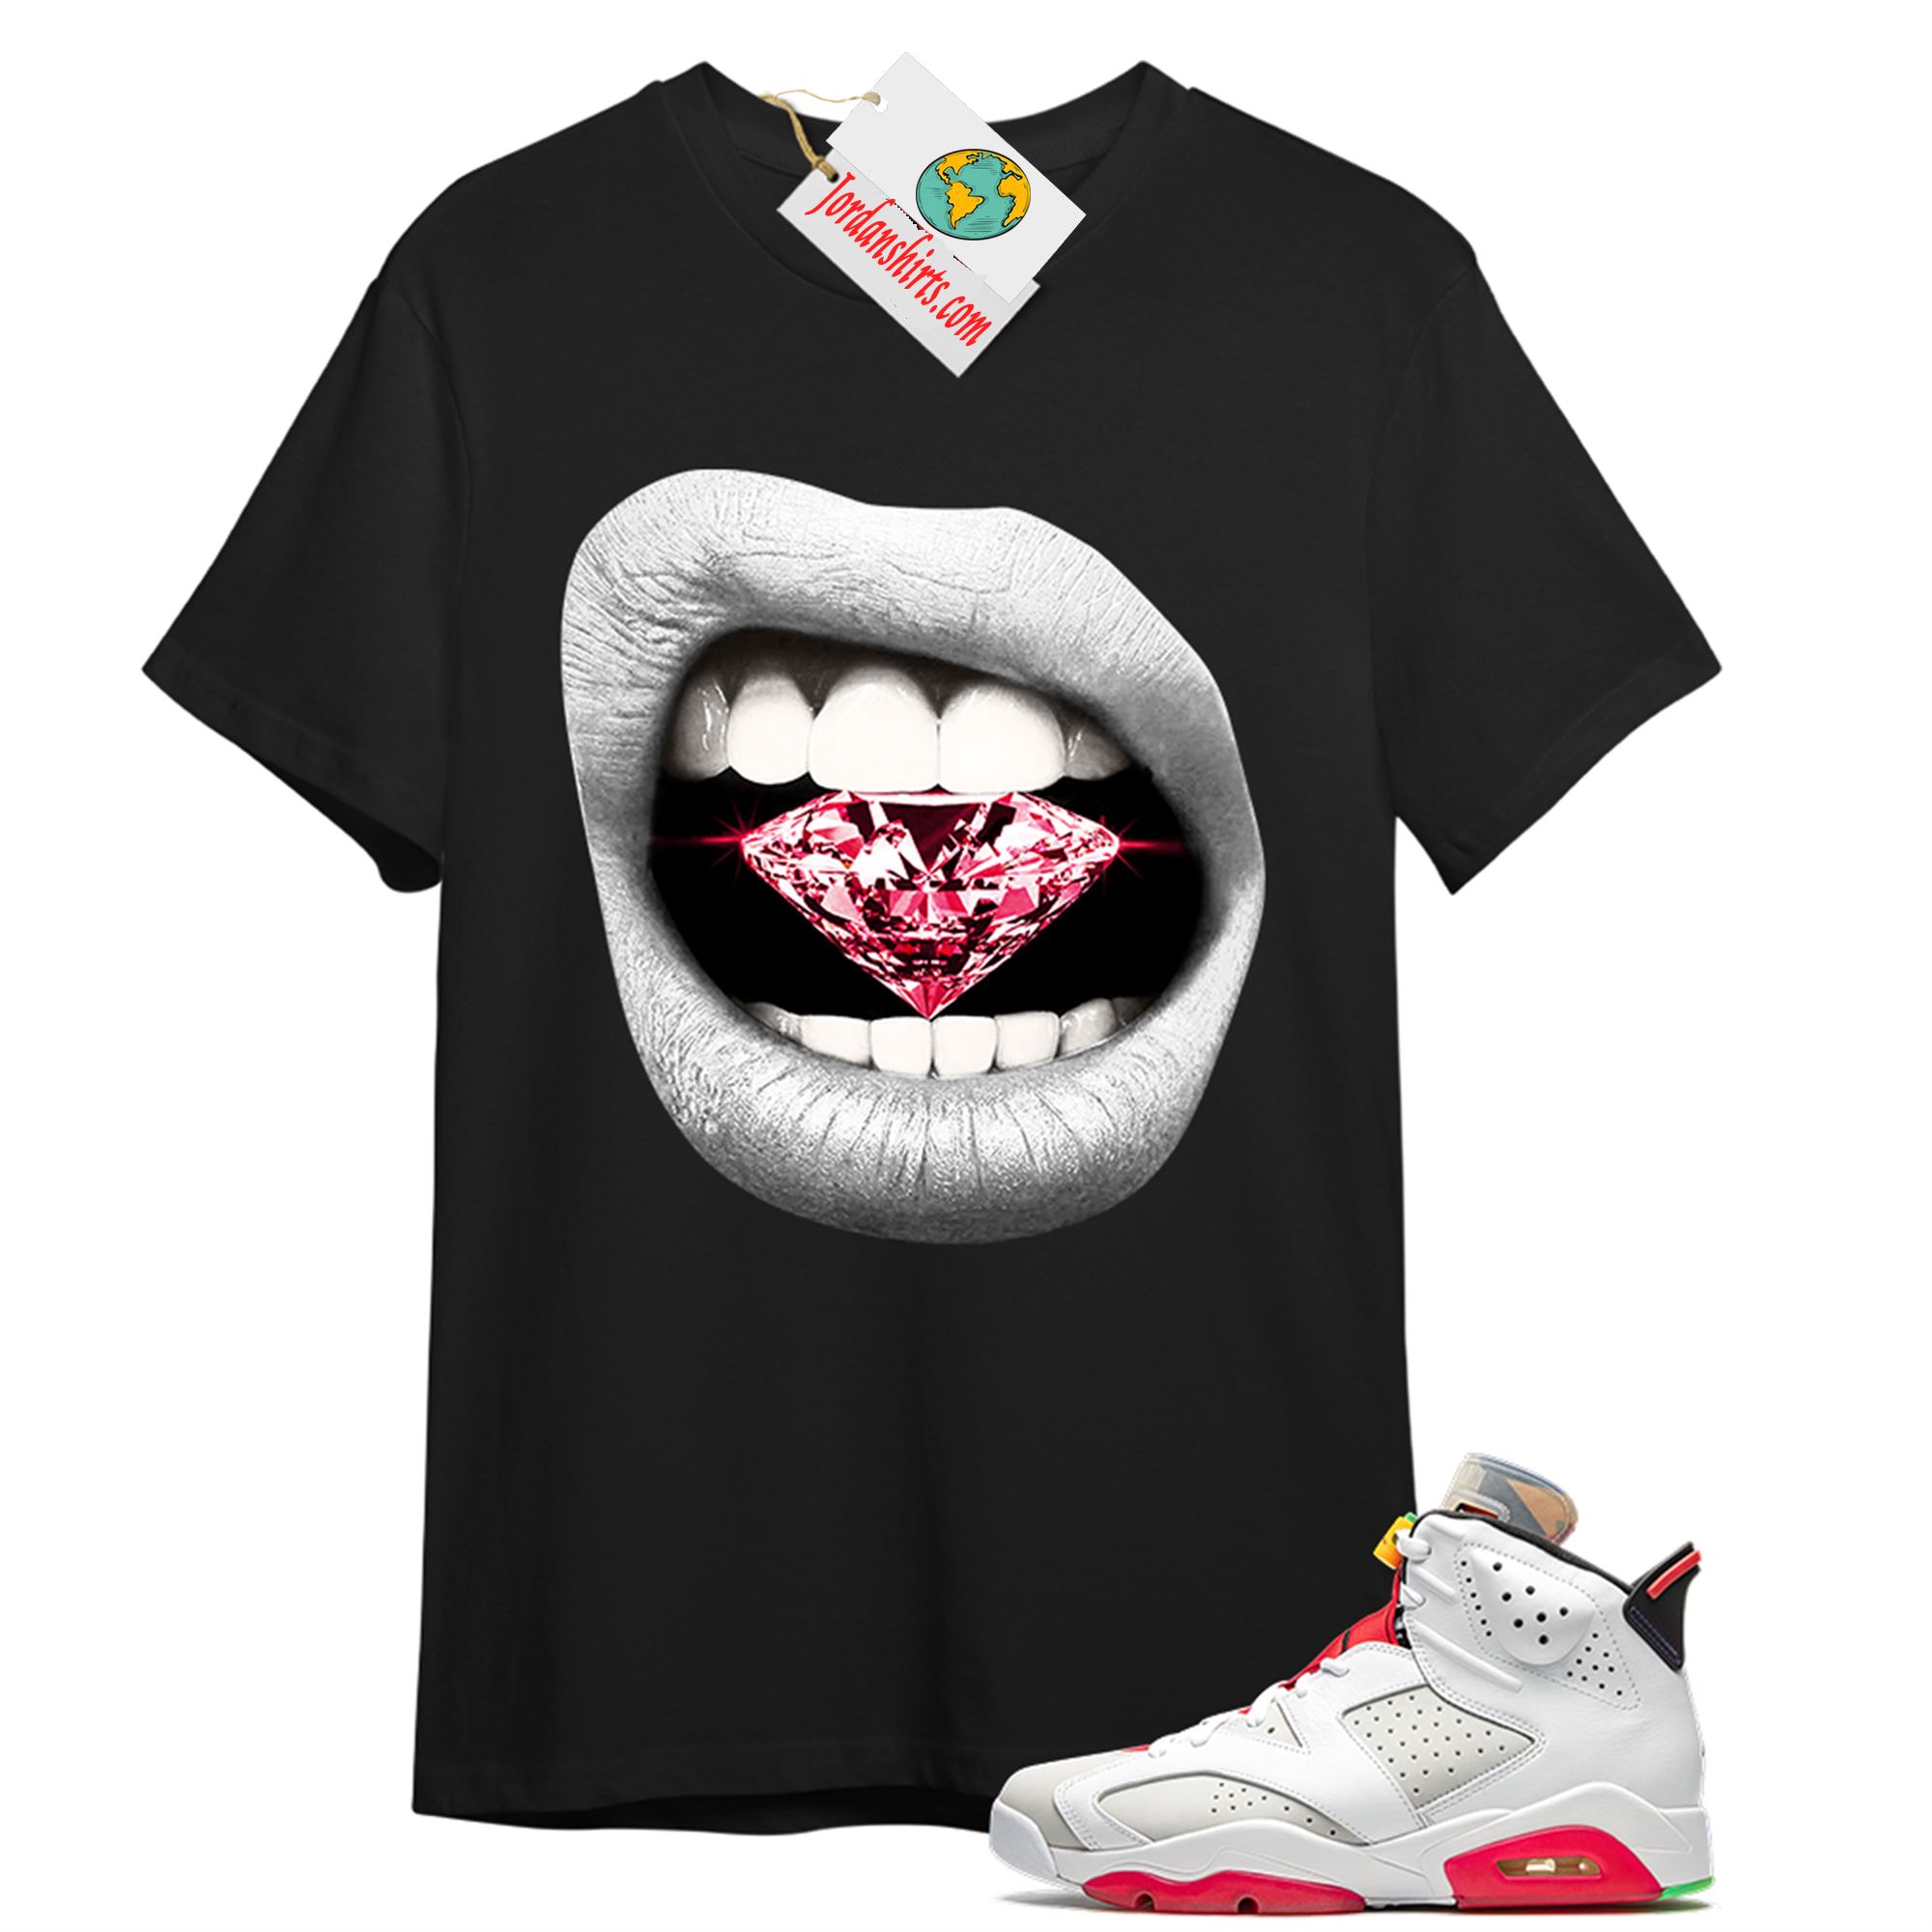 Jordan 6 Shirt, Diamond Lip Black T-shirt Air Jordan 6 Hare 6s Full Size Up To 5xl